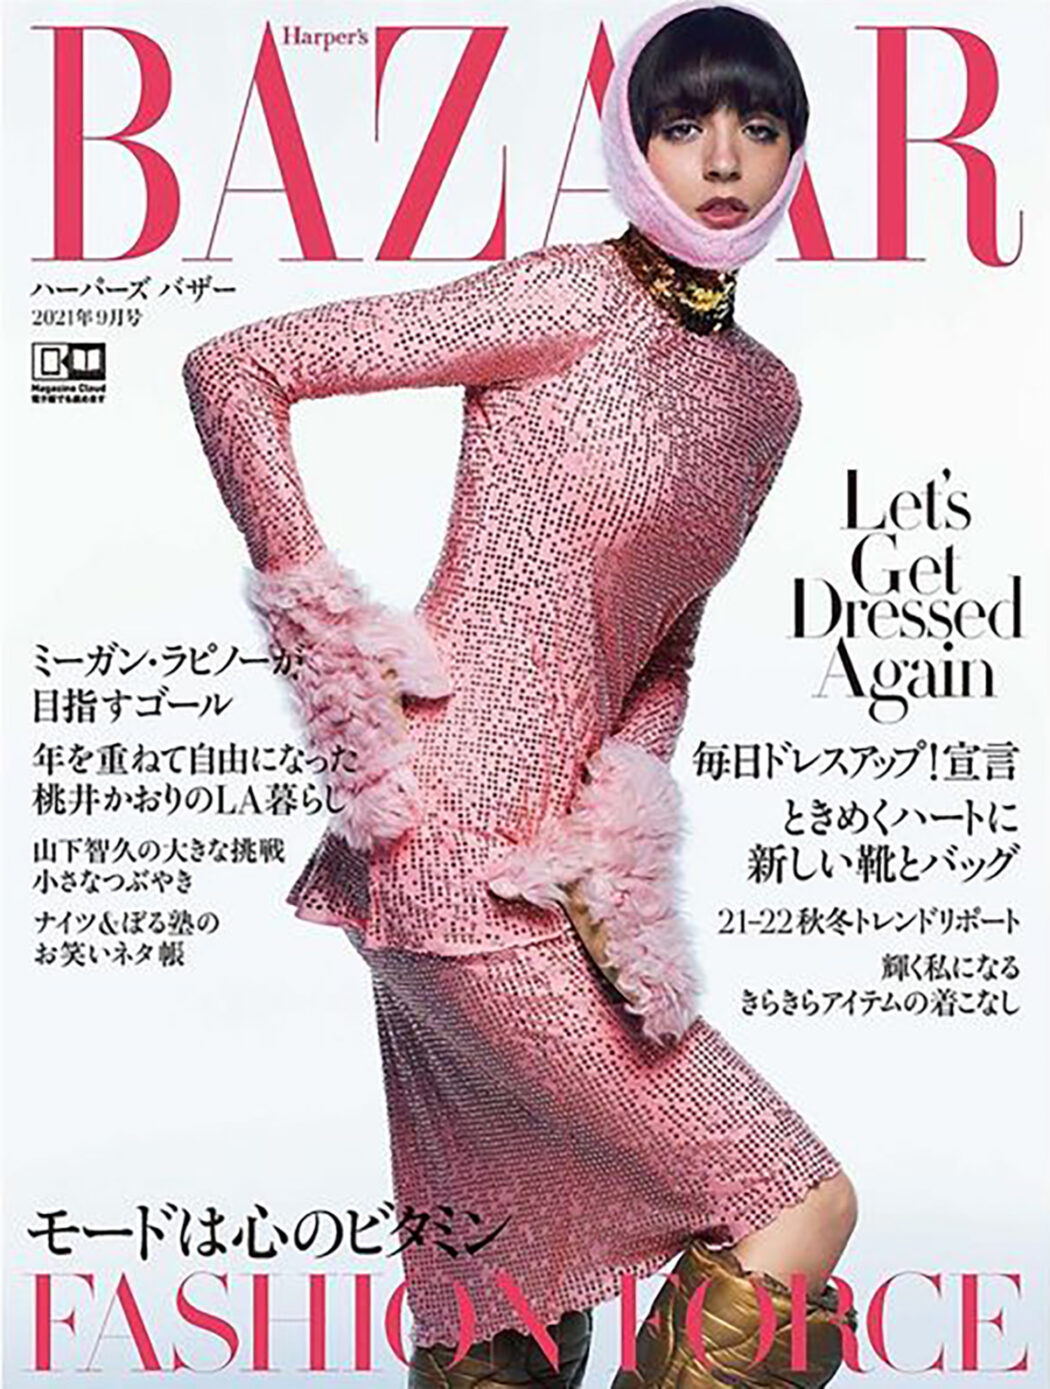 Styled by Yoko Kageyama
Harper's BAZAAR September issue 2021